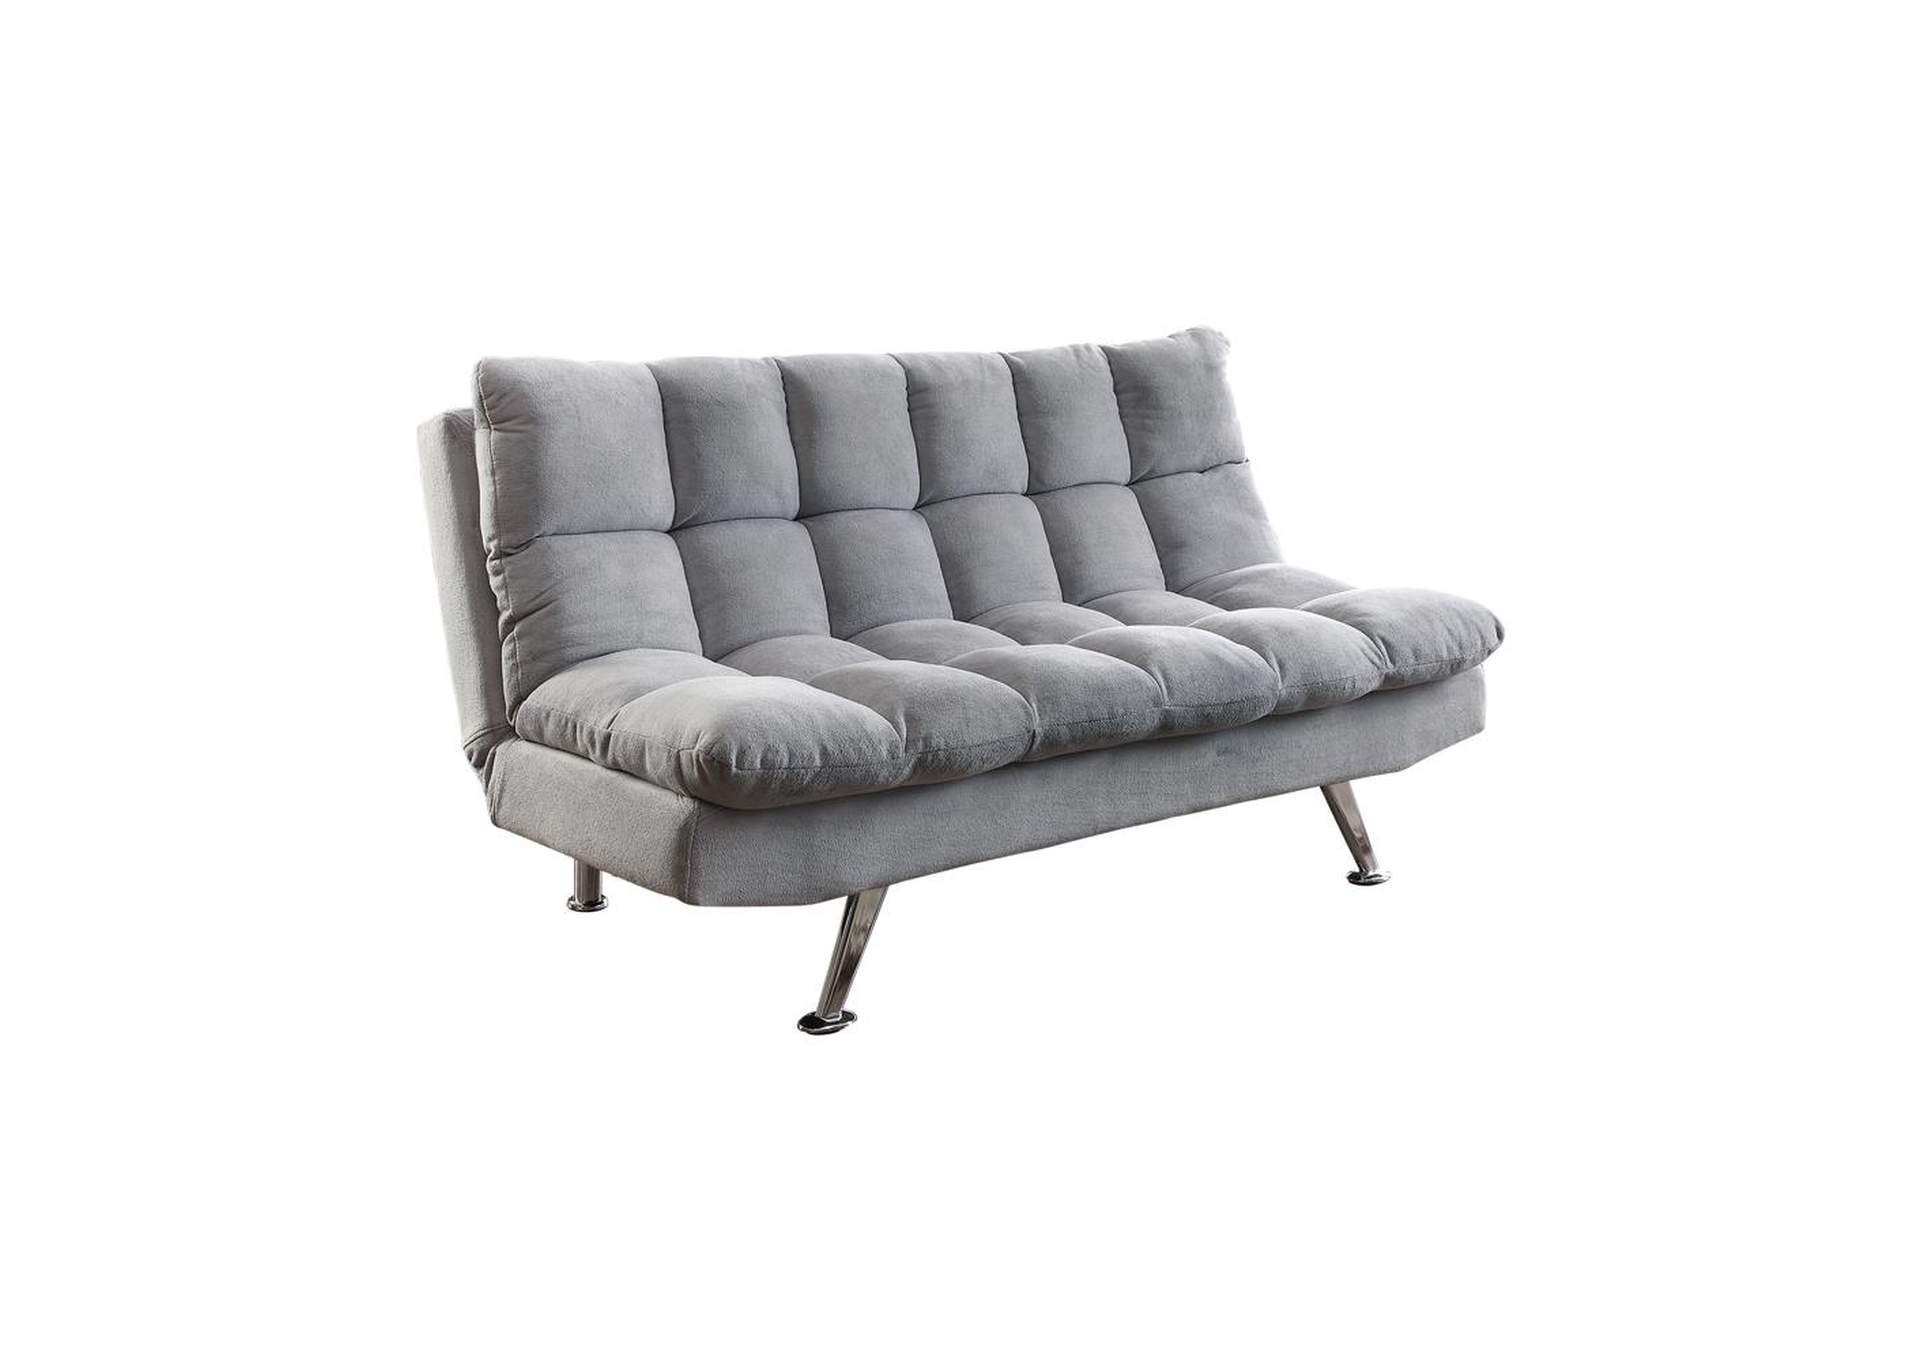 Chrome Transitional Dark Grey and Chrome Sofa Bed,Coaster Furniture